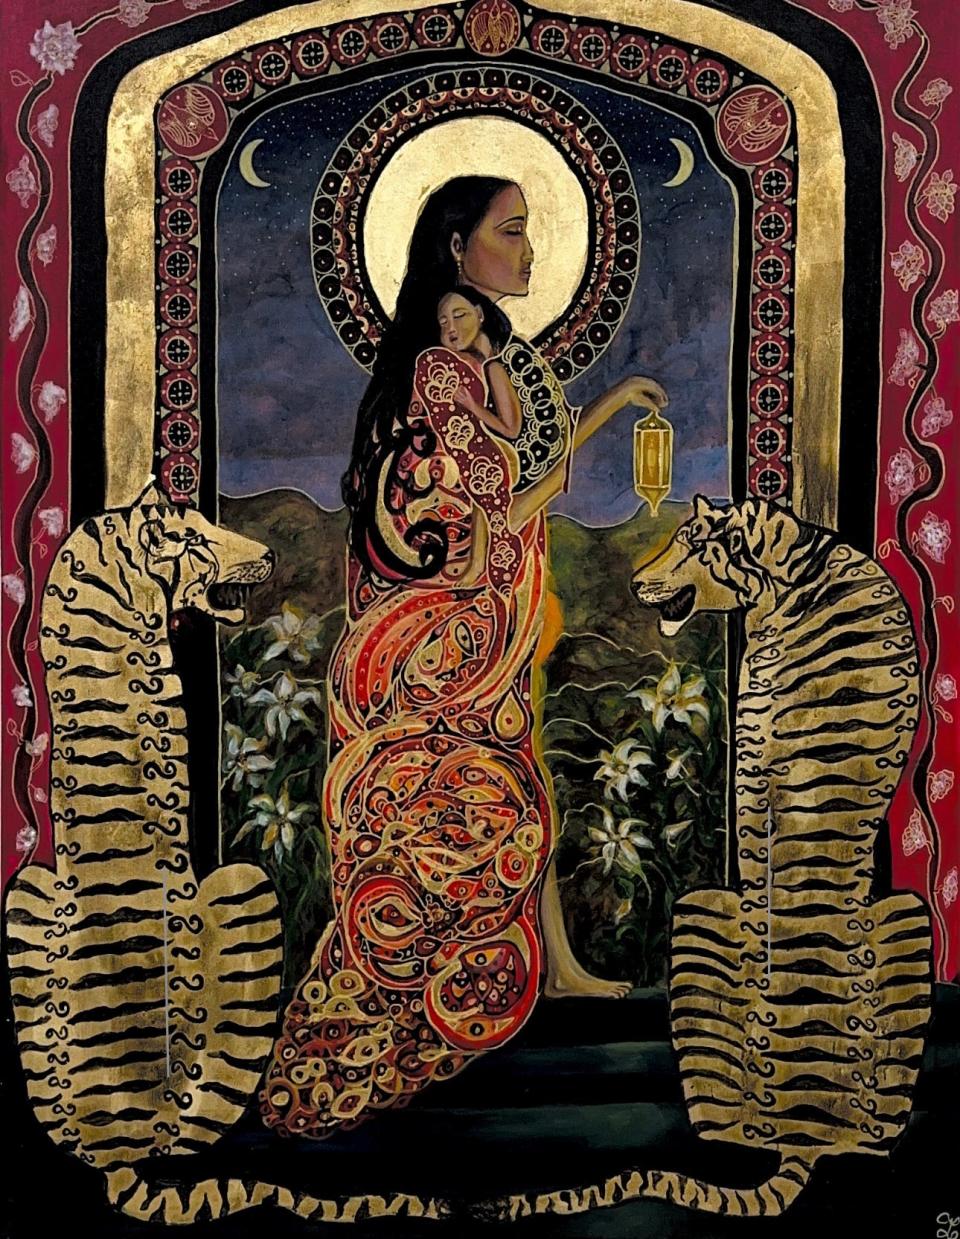 Isabella Alsharif's "Her Golden Renaissance" exhibit runs through March 26 at the Tallahassee Artport Gallery.